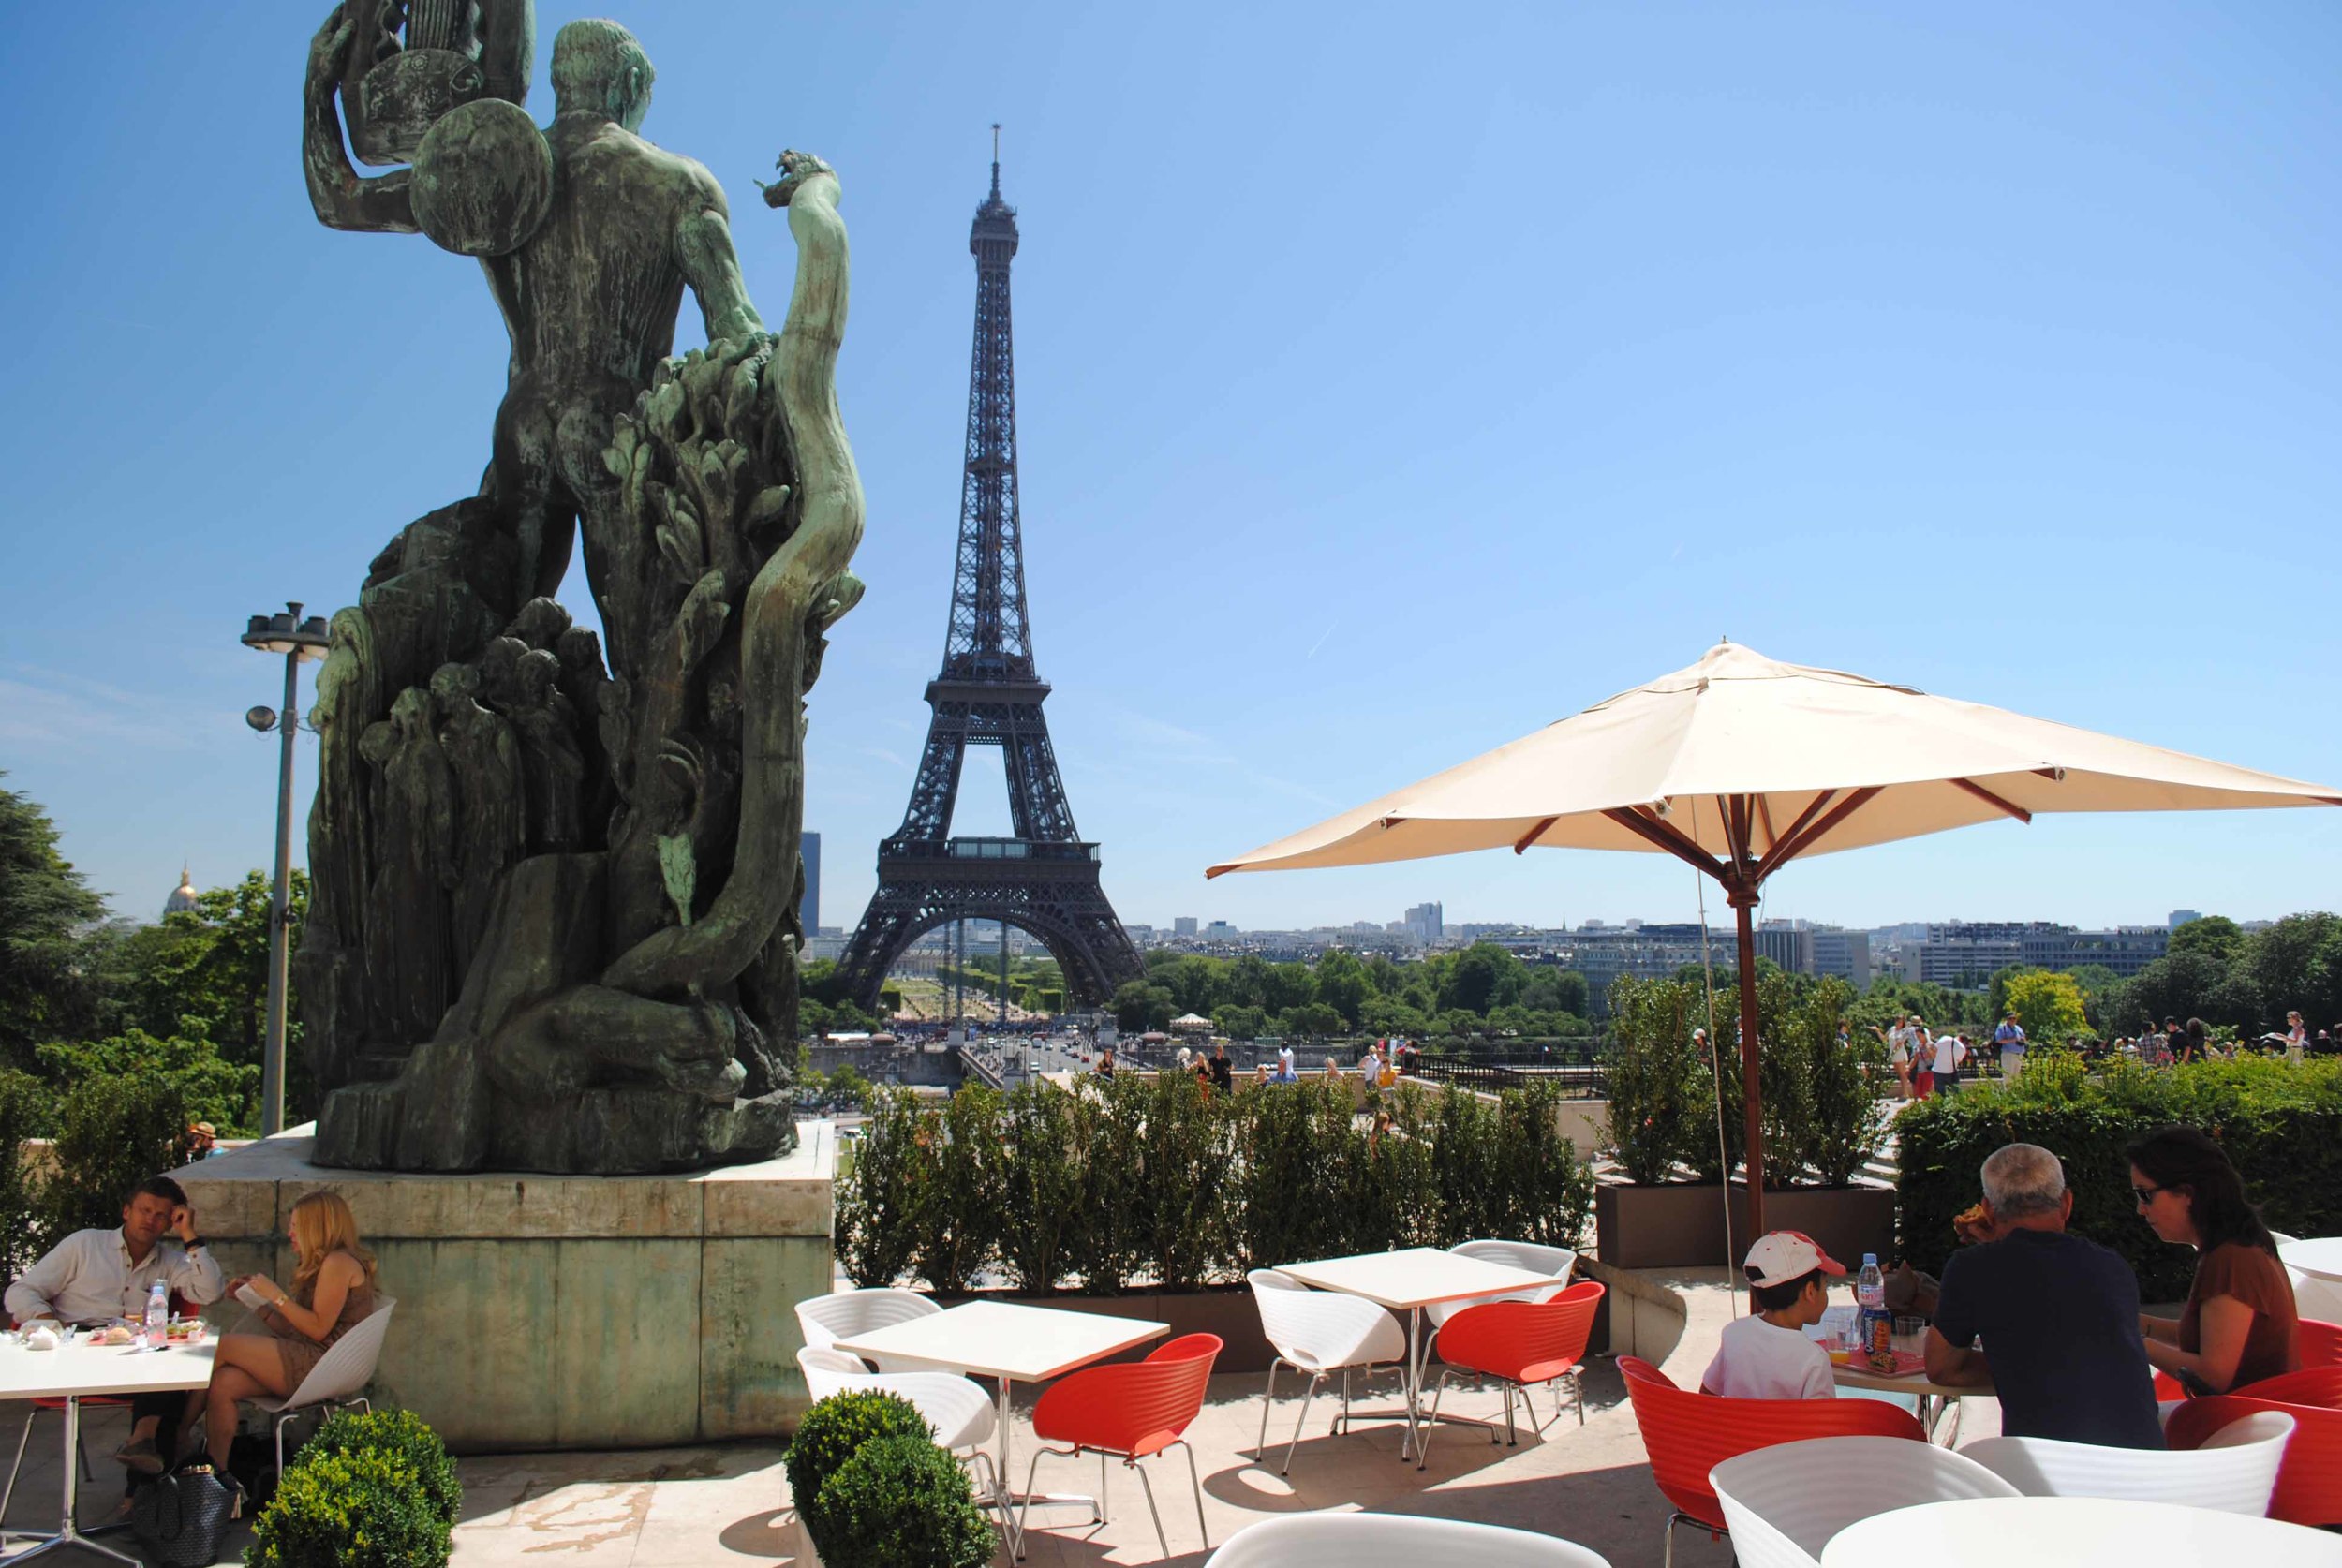 Eiffel Tower: Paris, France (Sojourner Tours)